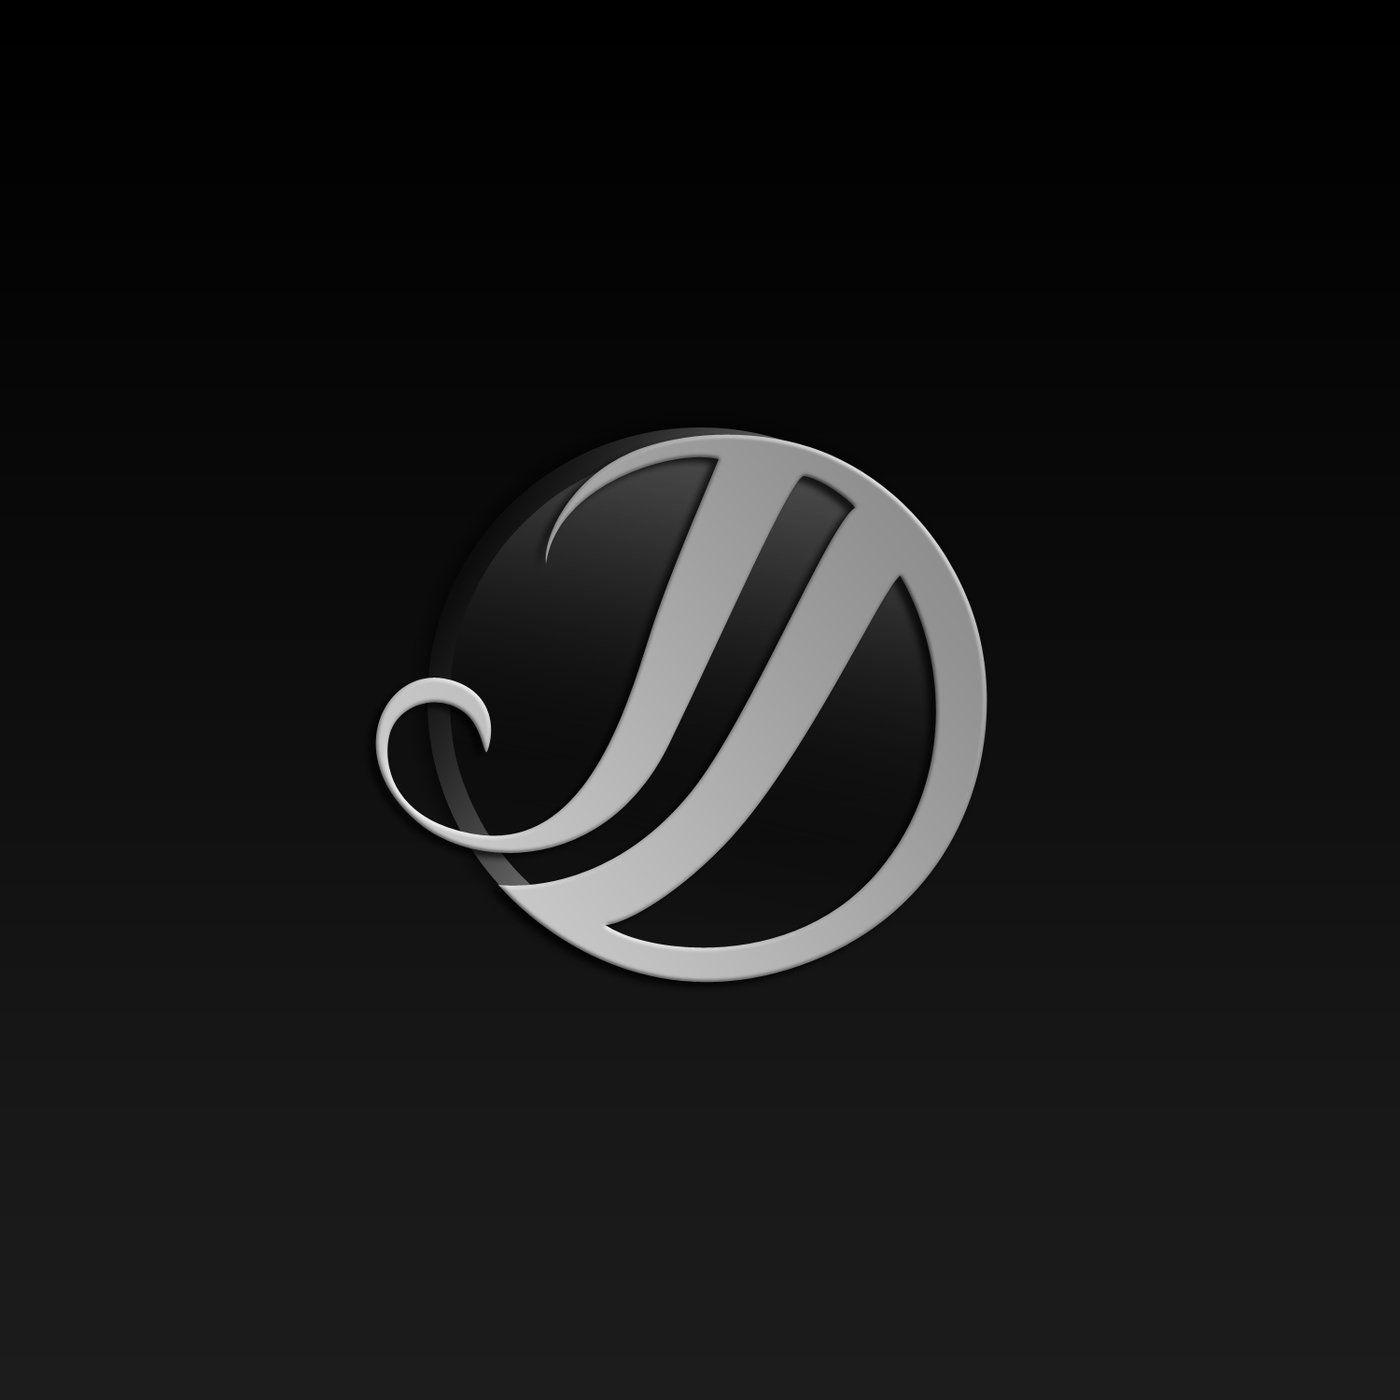 JD Logo - Logo Design Photography by Mariya Brachkova at Coroflot.com